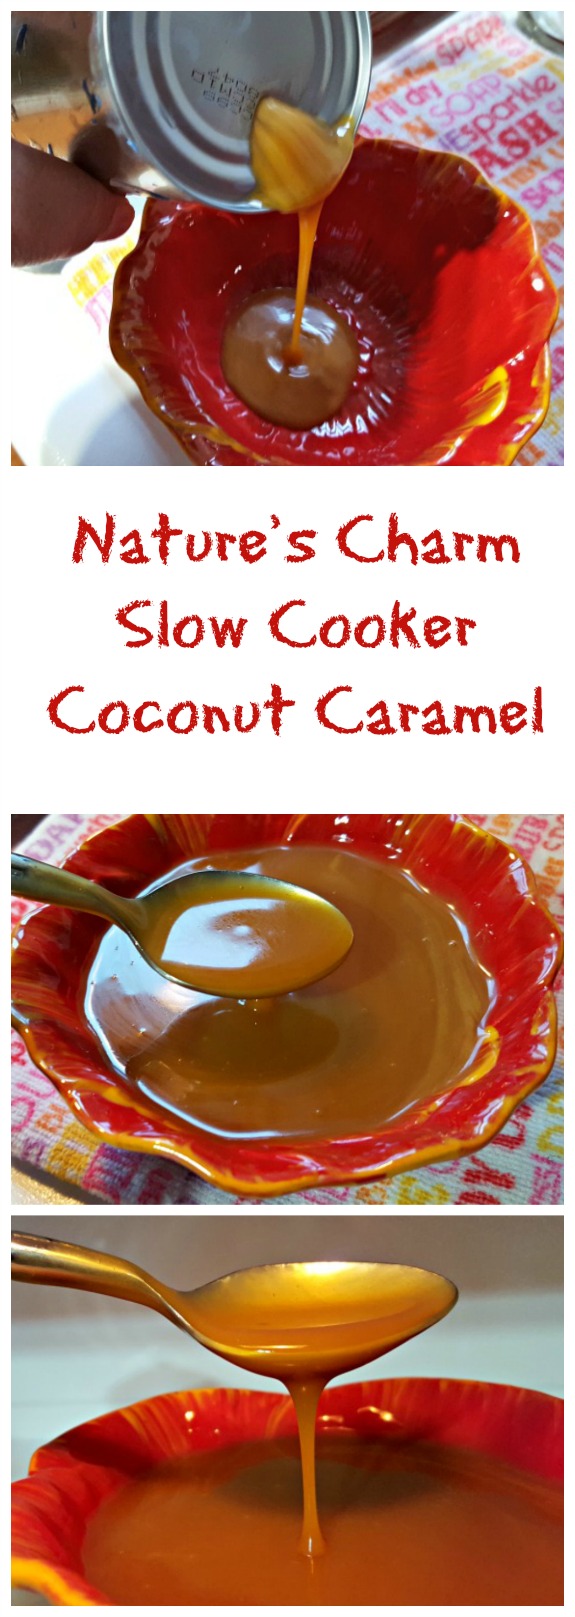 Slow Cooker Coconut Caramel